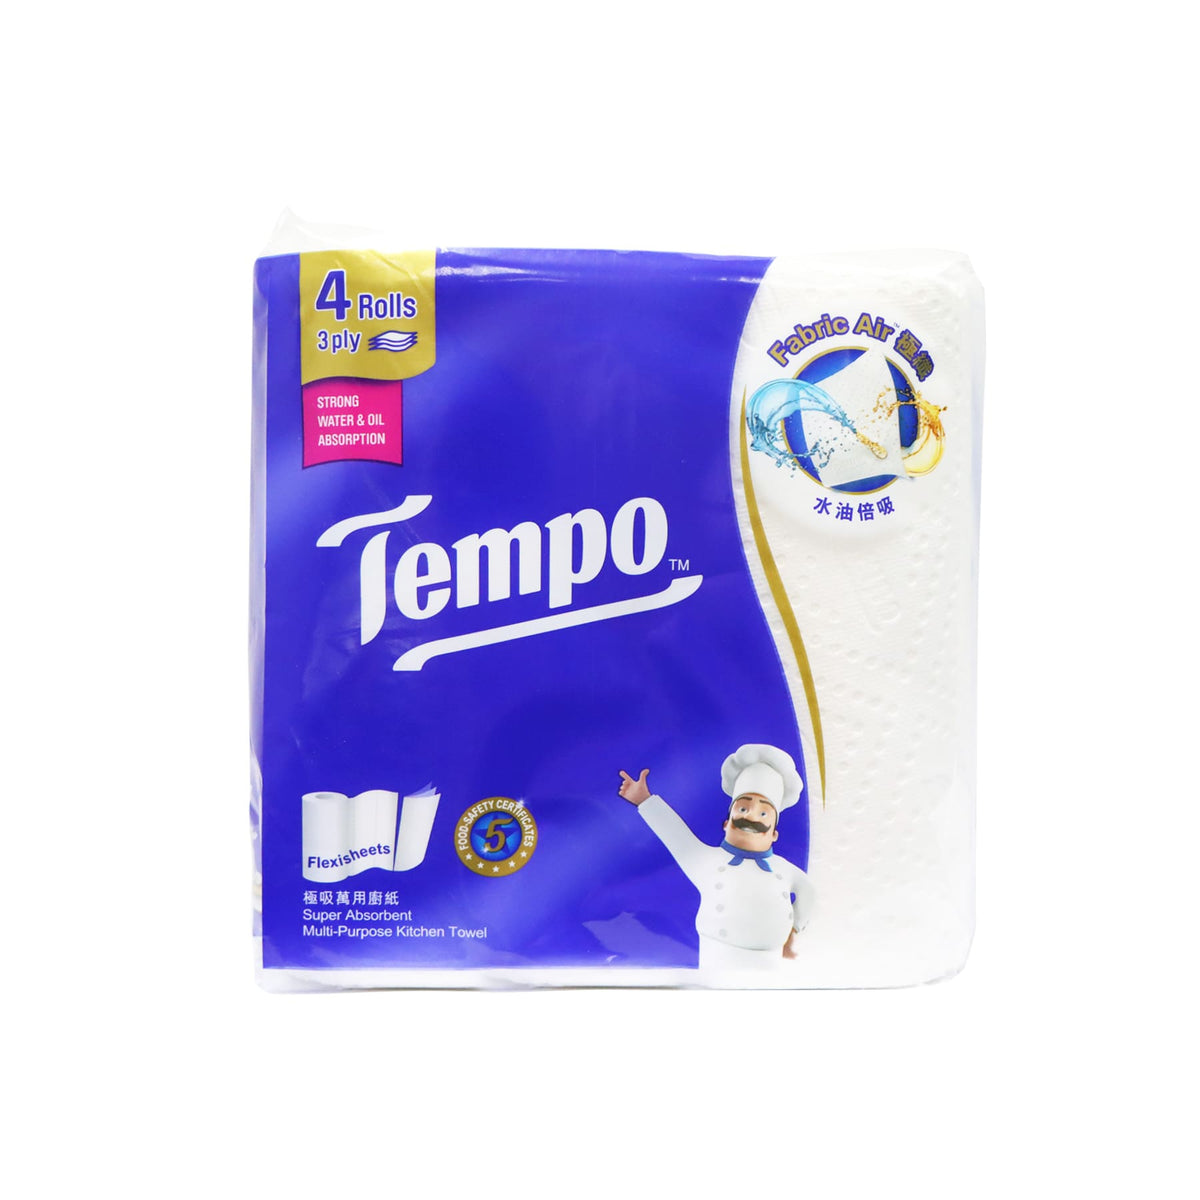 Tempo Super Absorbent Multi Purpose Kitchen Towel (Rolls) 4 Rolls per pack